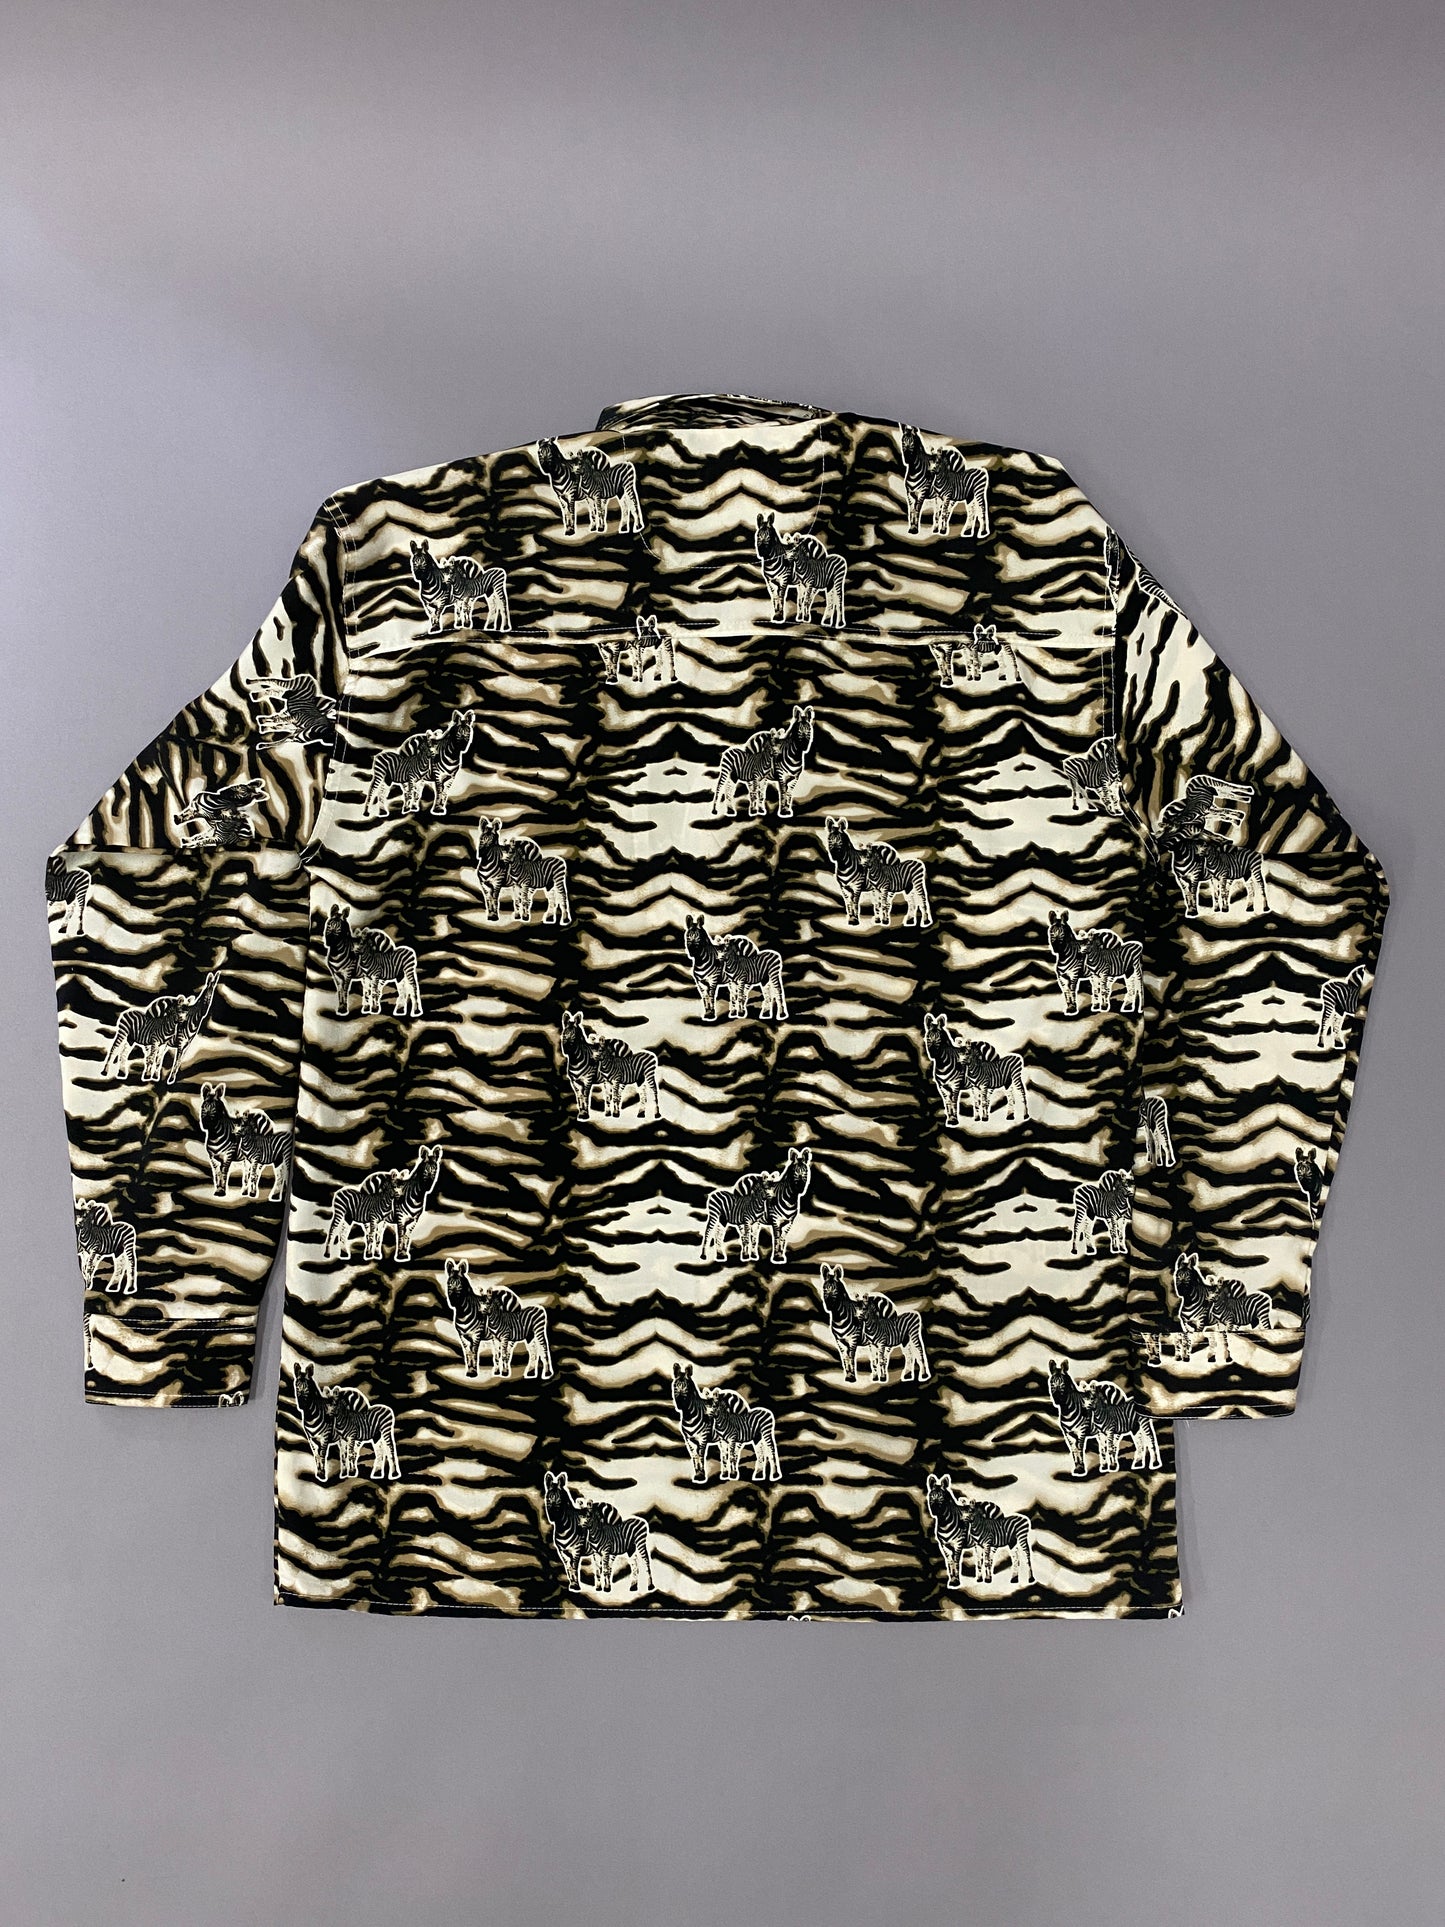 Zebra Animal Print Vintage Shirt